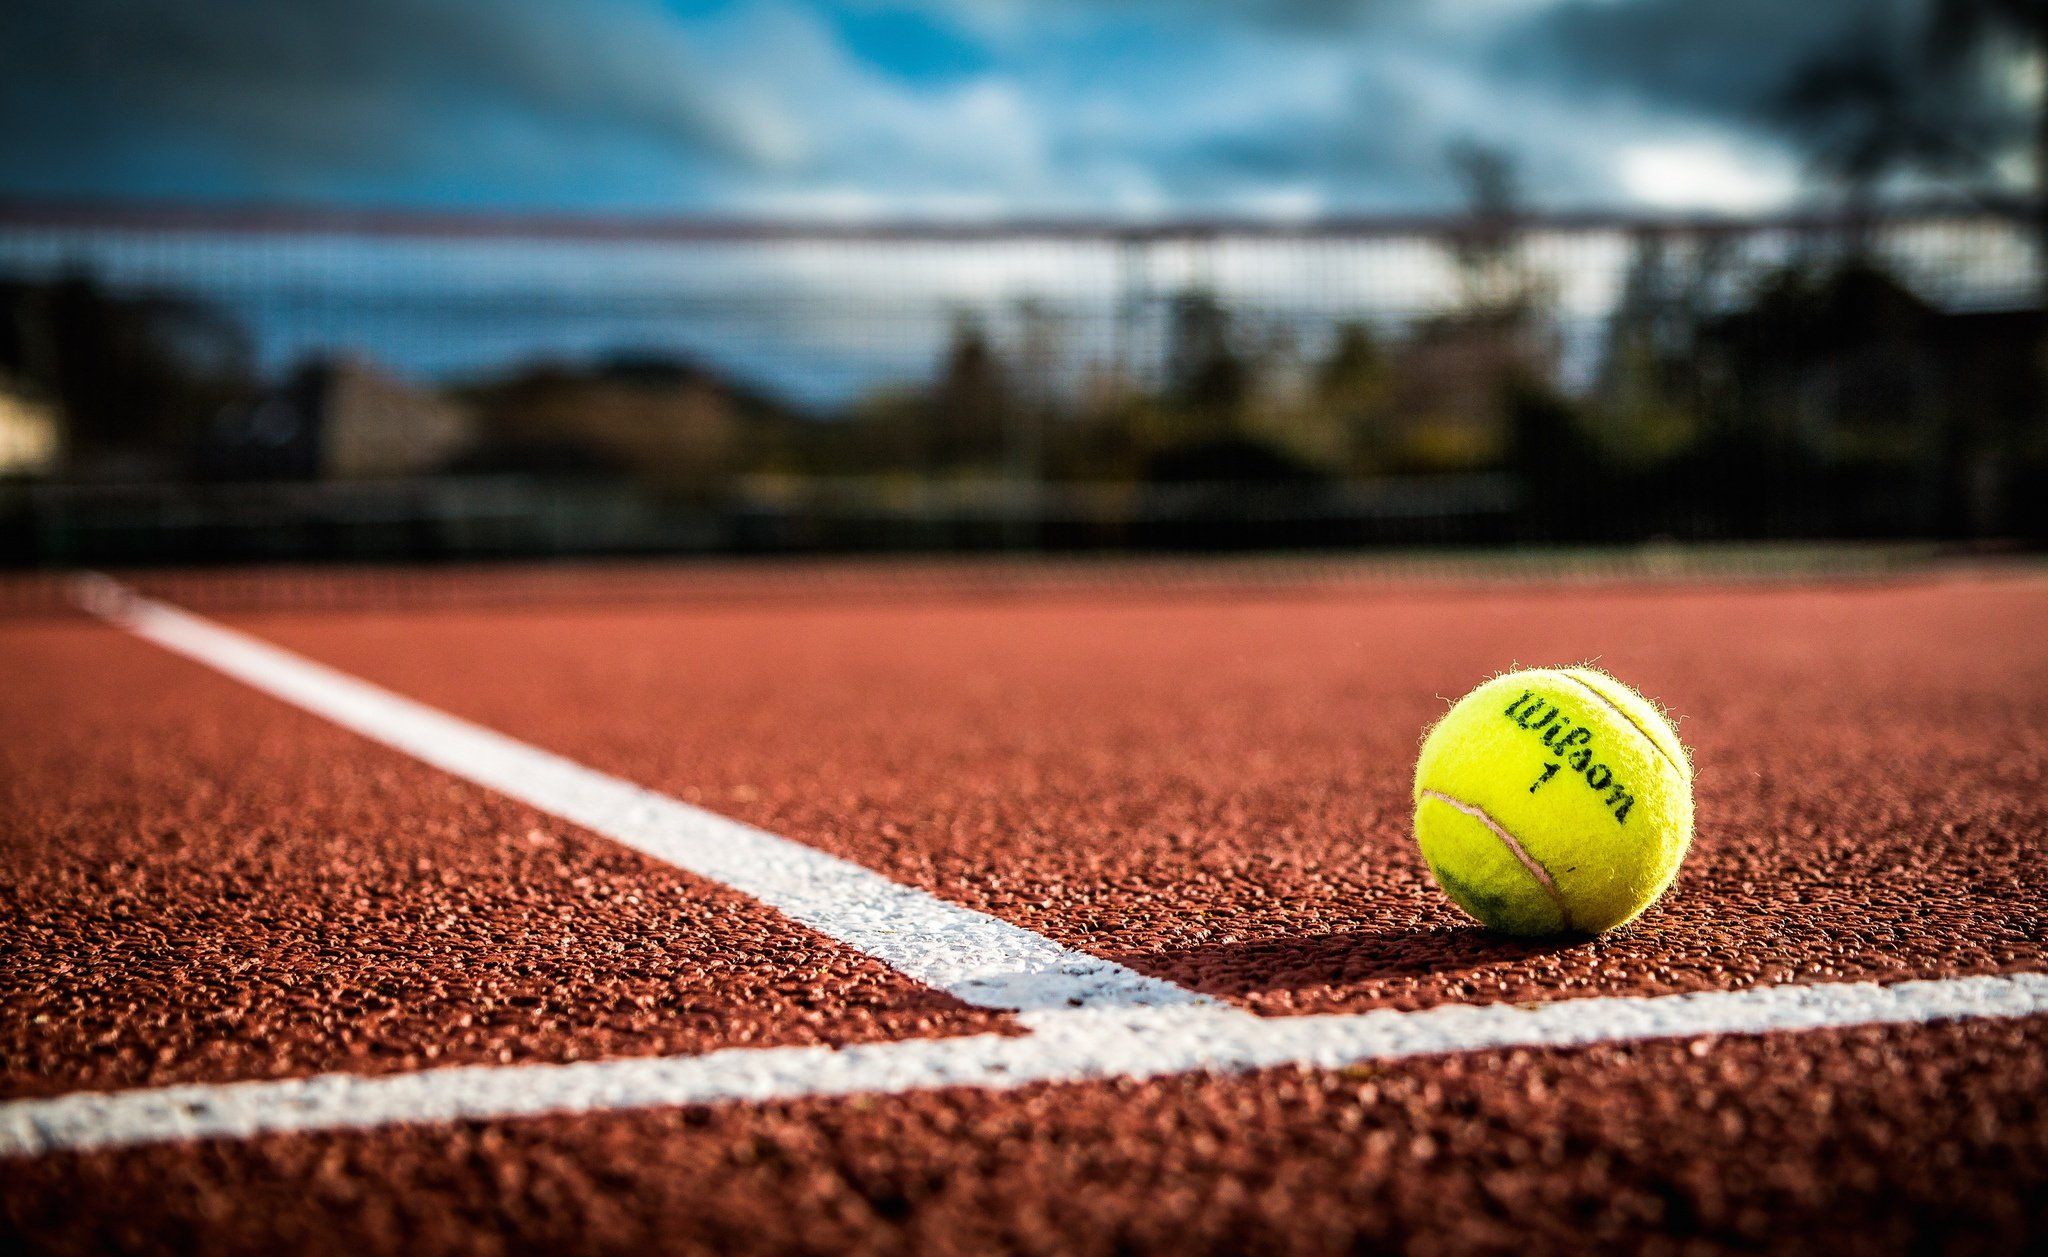 A tennis ball on the line of a tennis court - Tennis